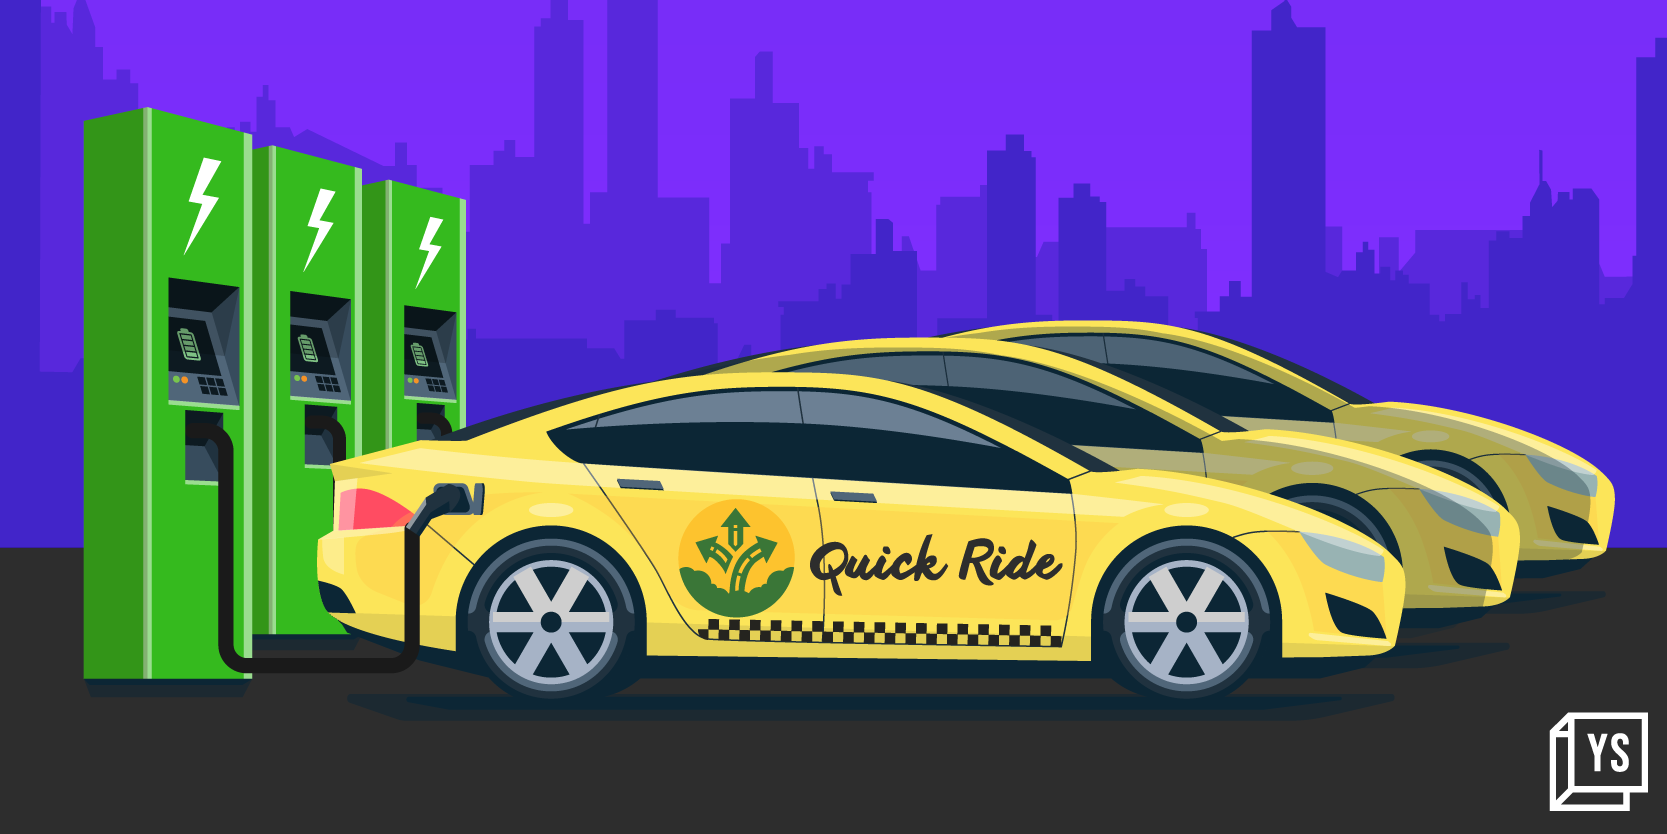 Quick Ride bets on EV fleet to drive profitability, while carpooling, ICE biz find break-even lane